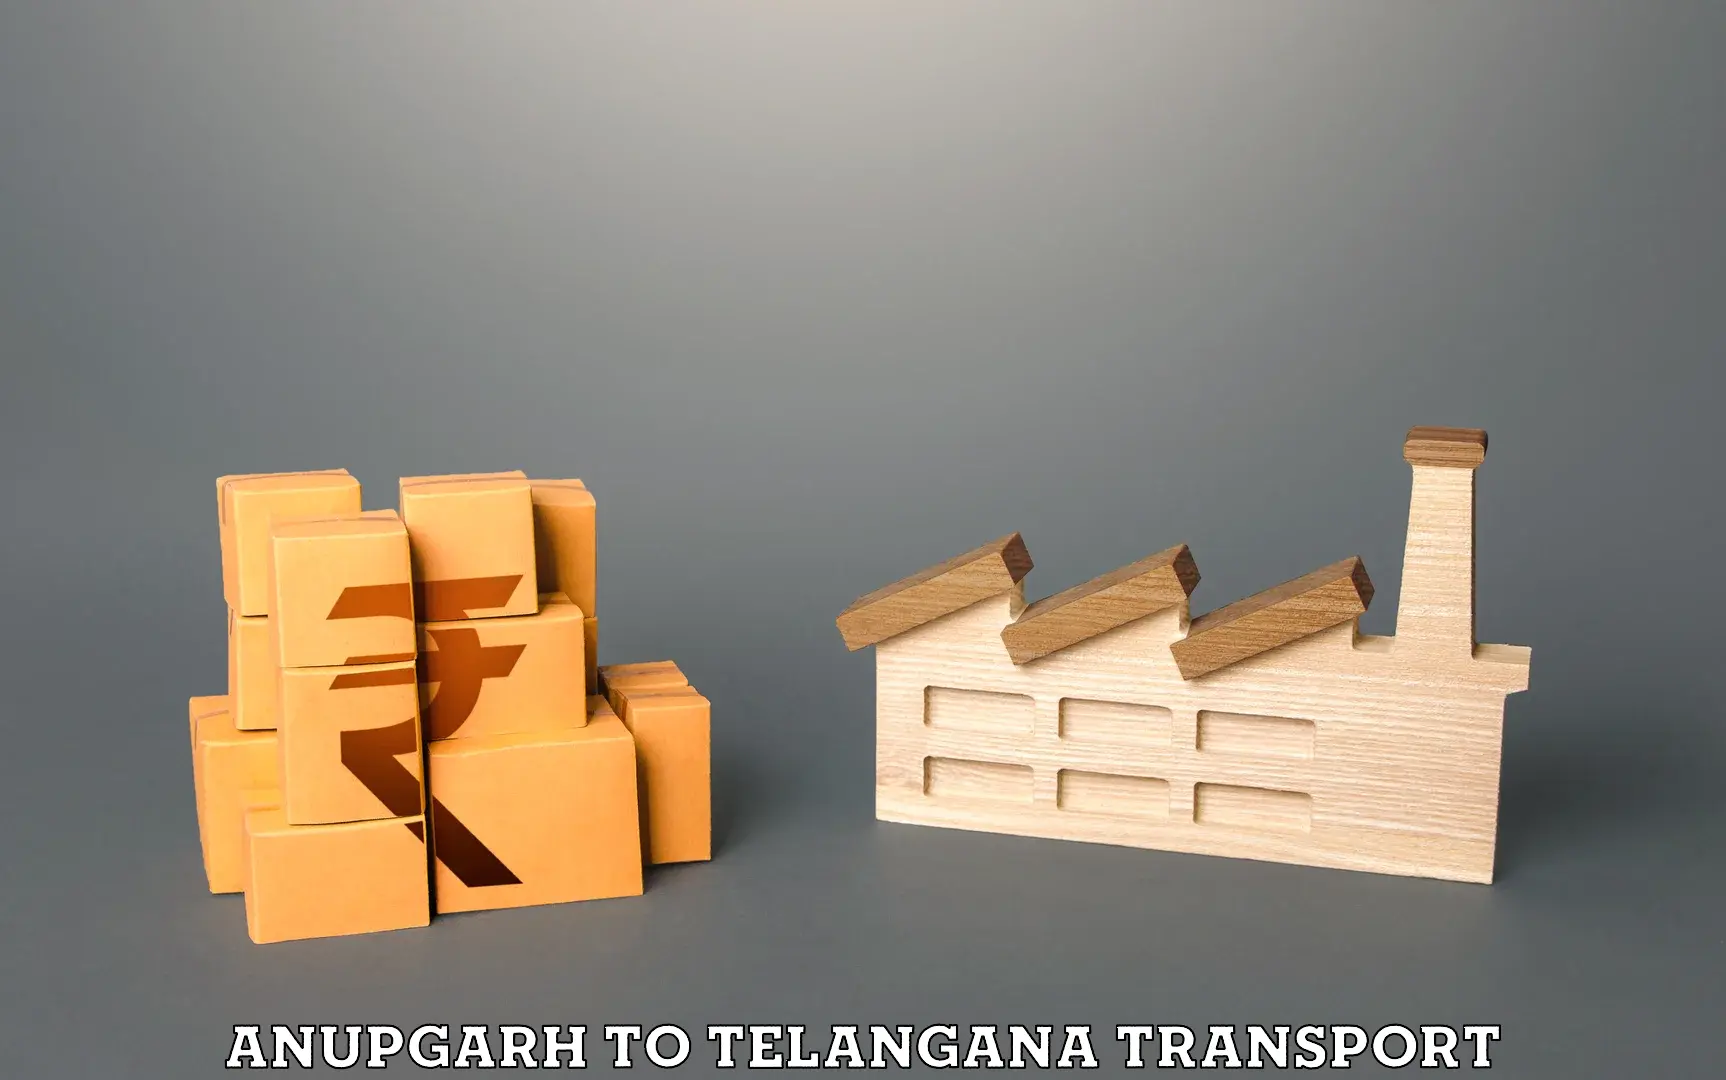 Nearby transport service Anupgarh to Ramagundam